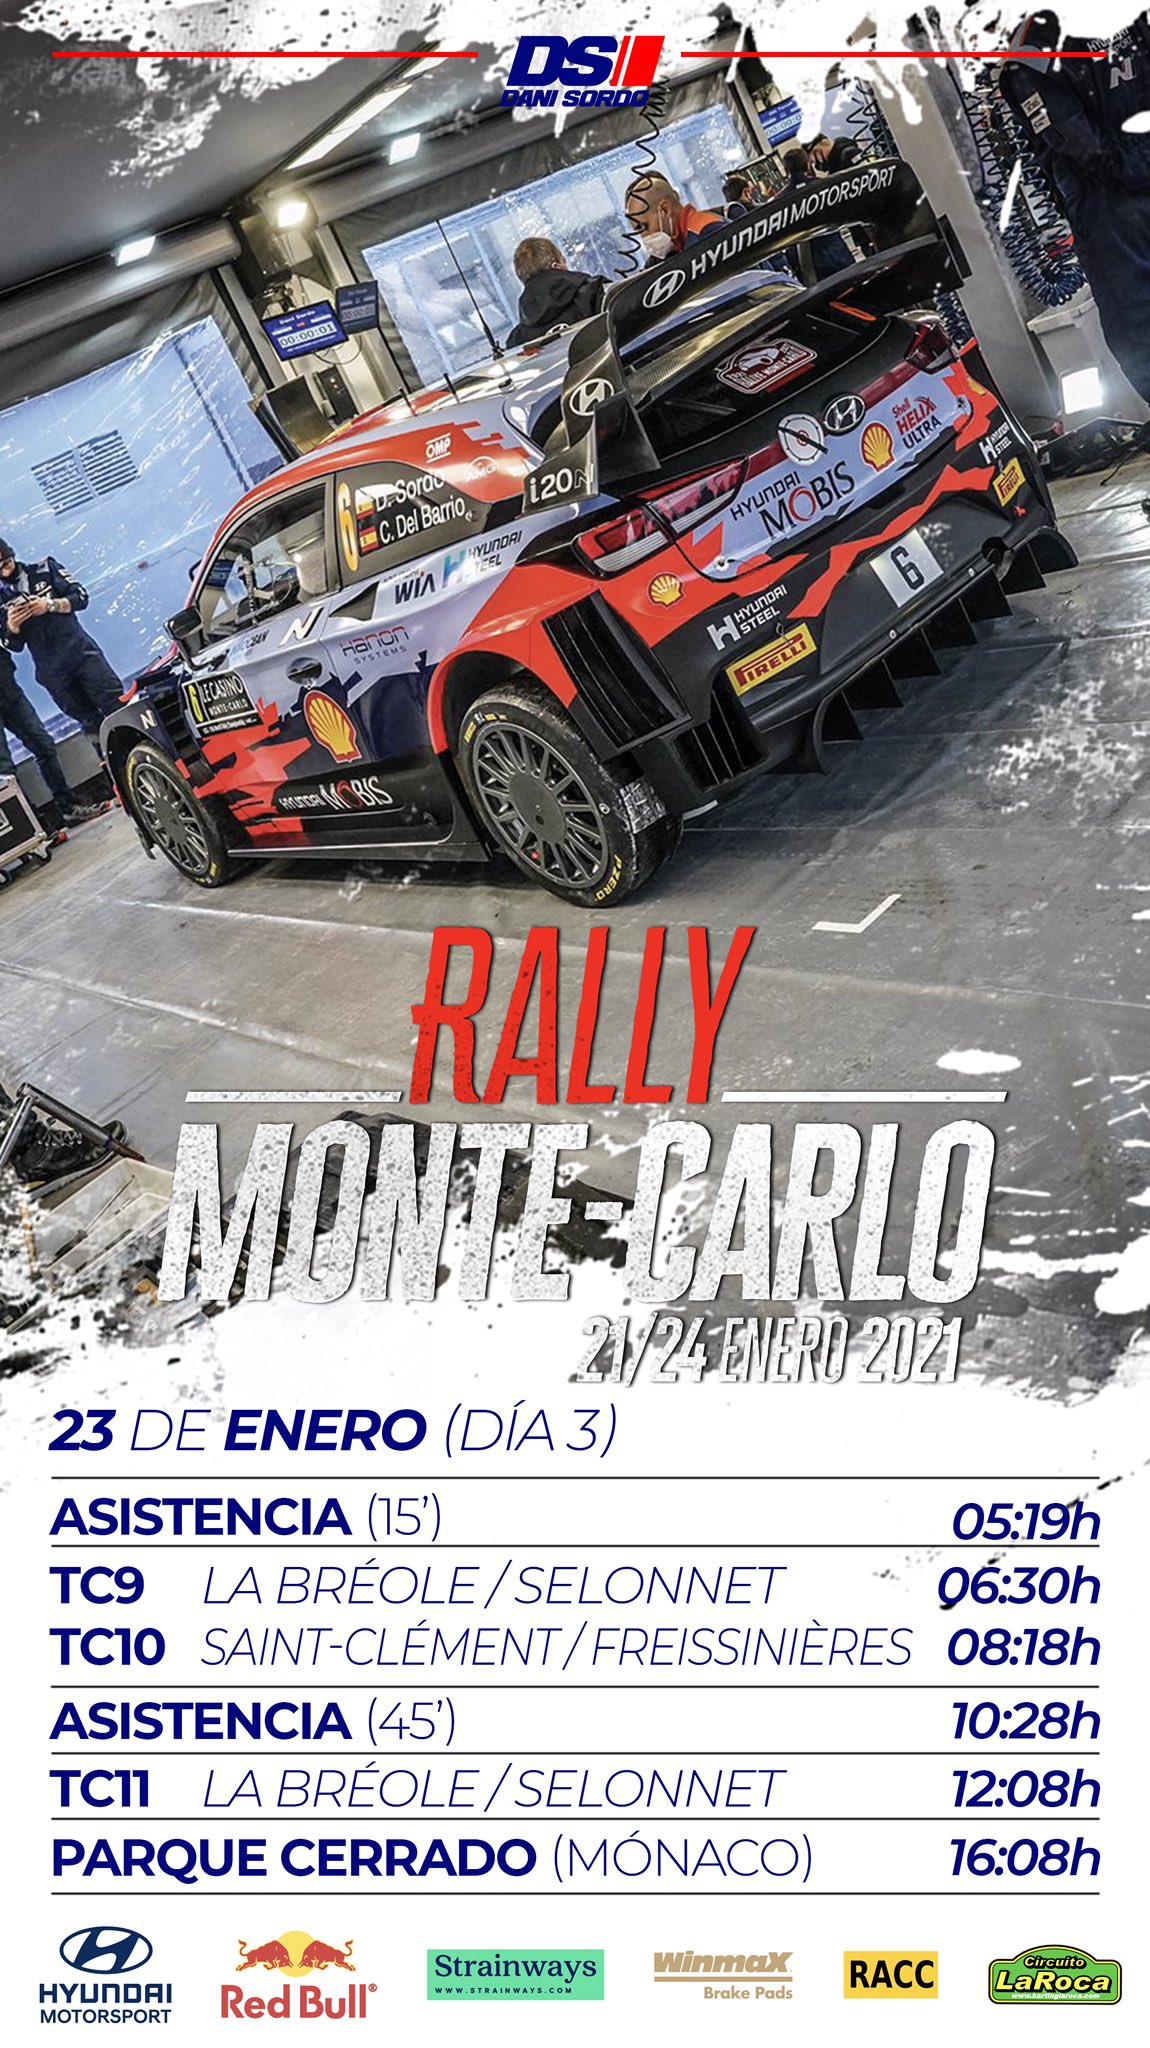 wrc - WRC: 89º Rallye Automobile de Monte-Carlo [18-24 Enero] - Página 9 EsY-9MMXMAYHysf?format=jpg&name=large